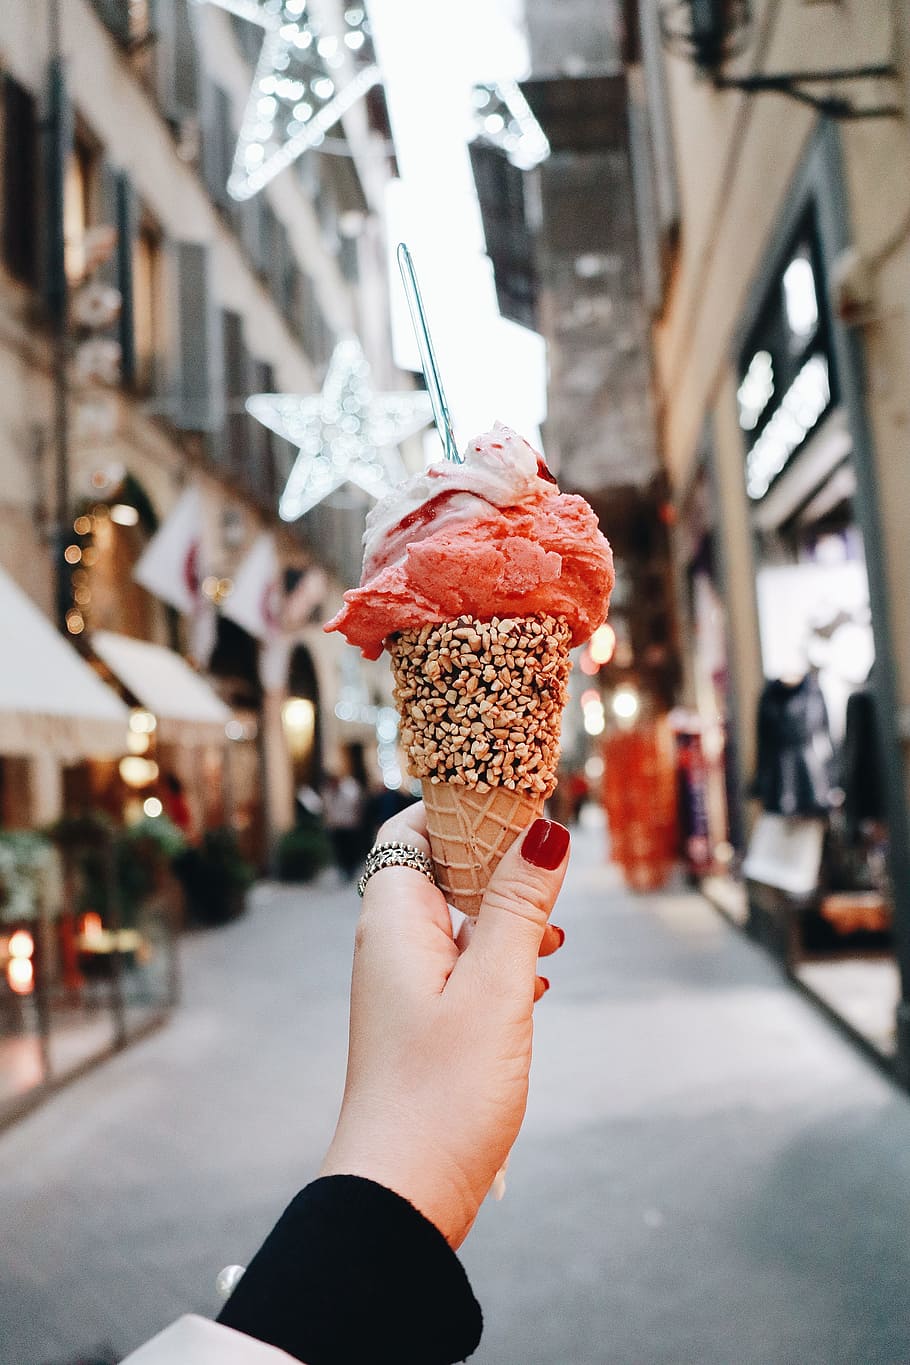 person holding ice cream, gelatto, ice cream selfie, strawberry